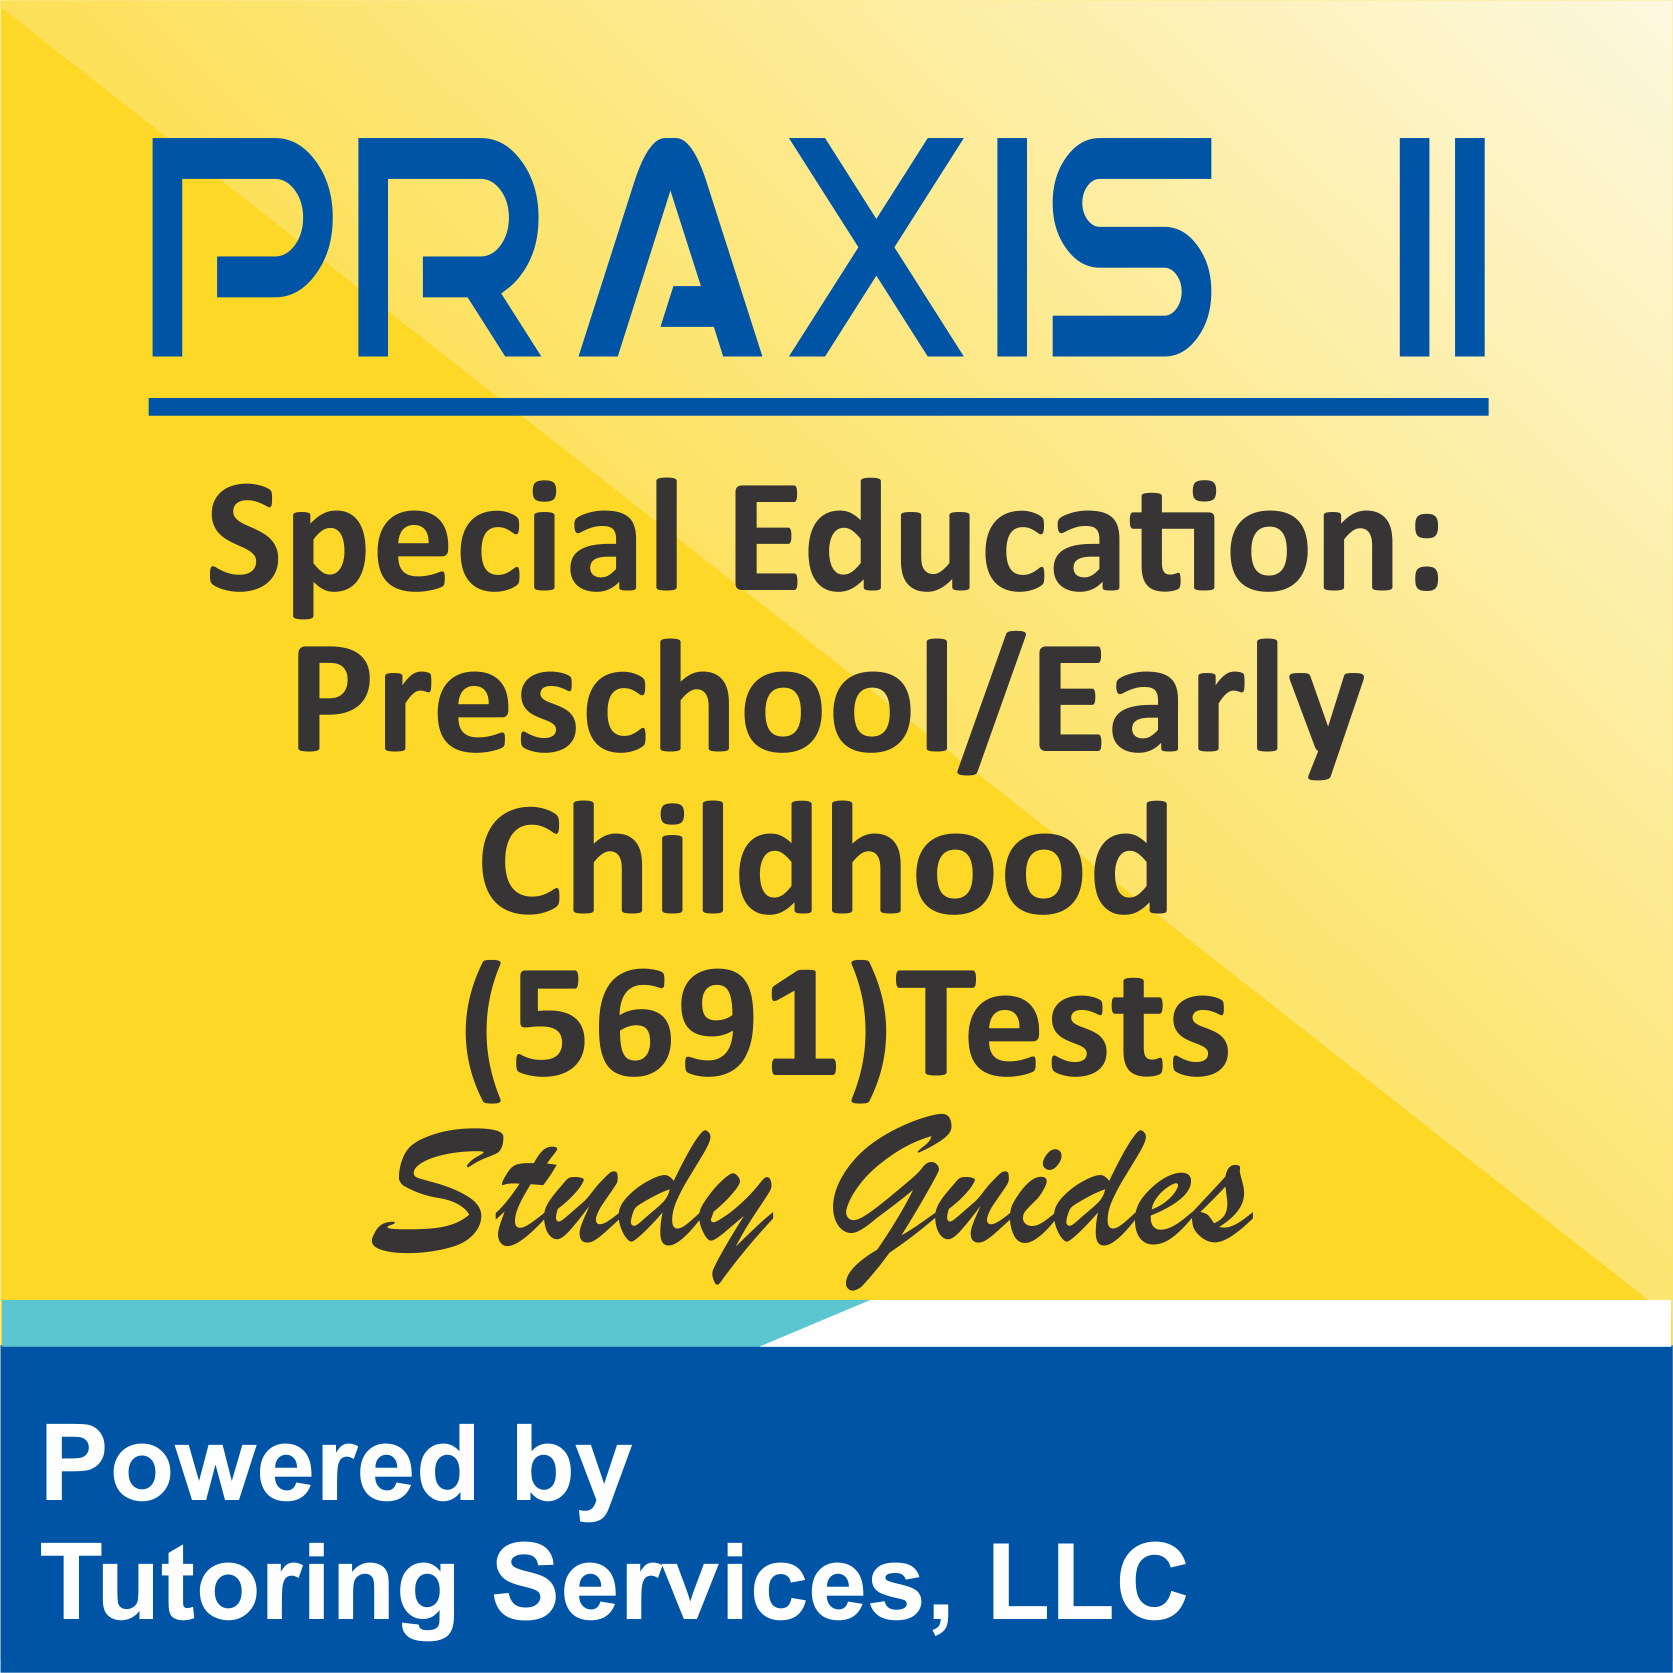 Praxis II Special Education: Preschool/Early Childhood (5691) Examination Format